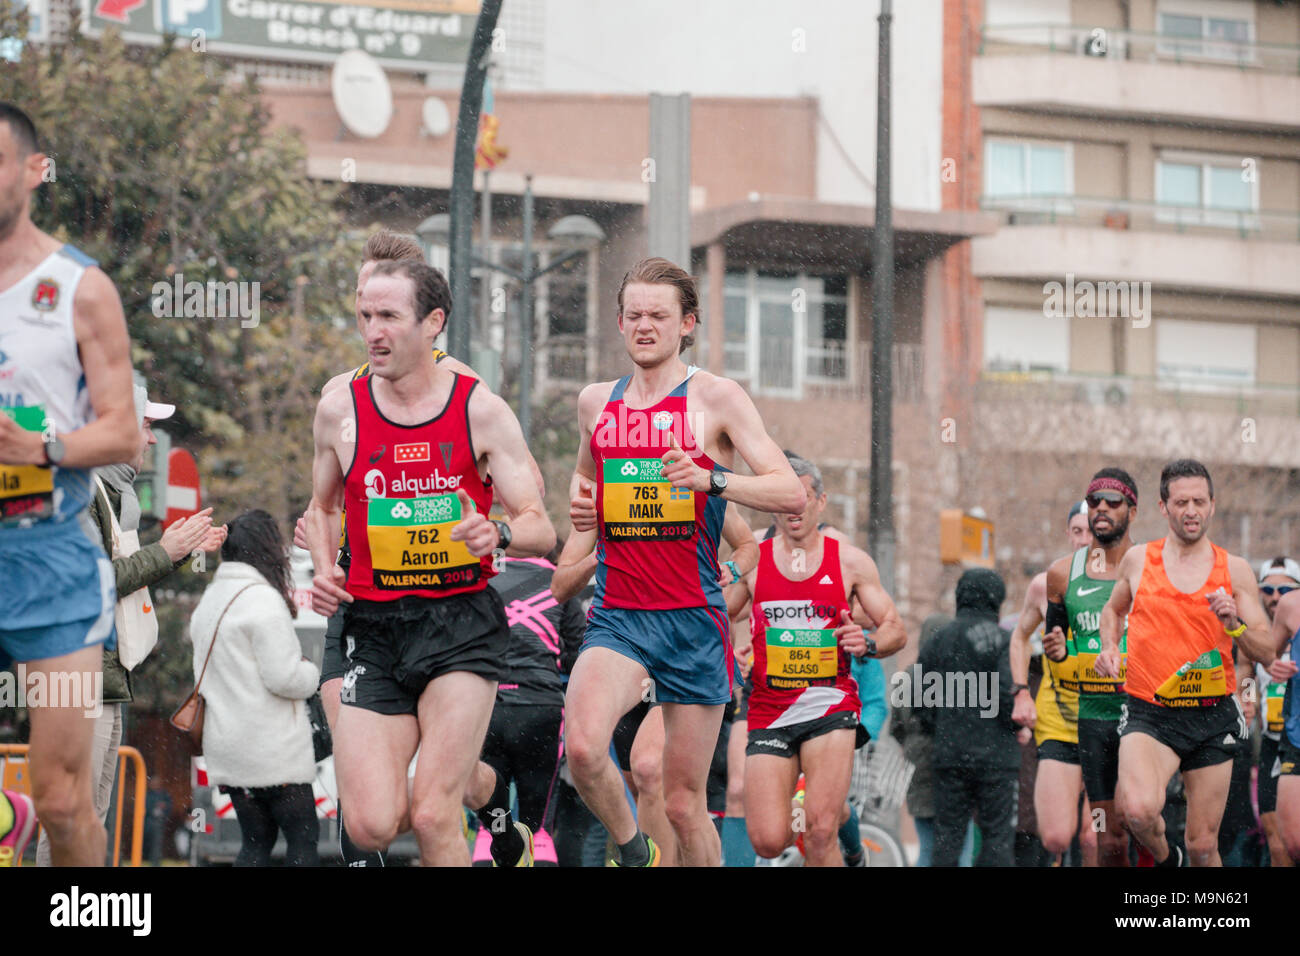 Media maratón mundial fotografías e imágenes de alta resolución - Alamy